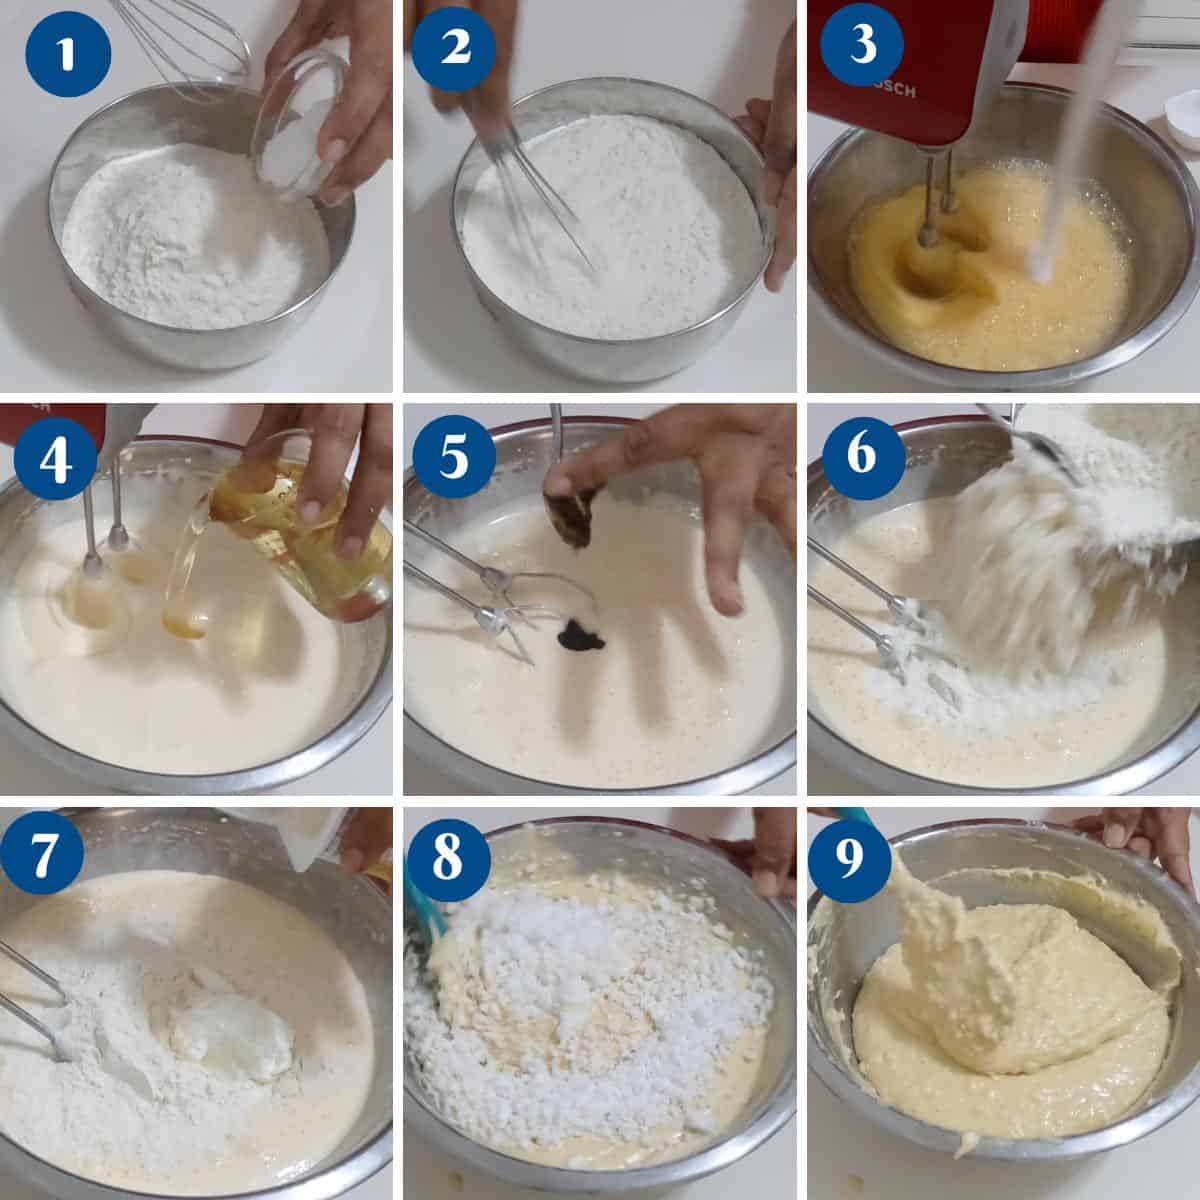 Progress pictures making the coconut cake recipe.